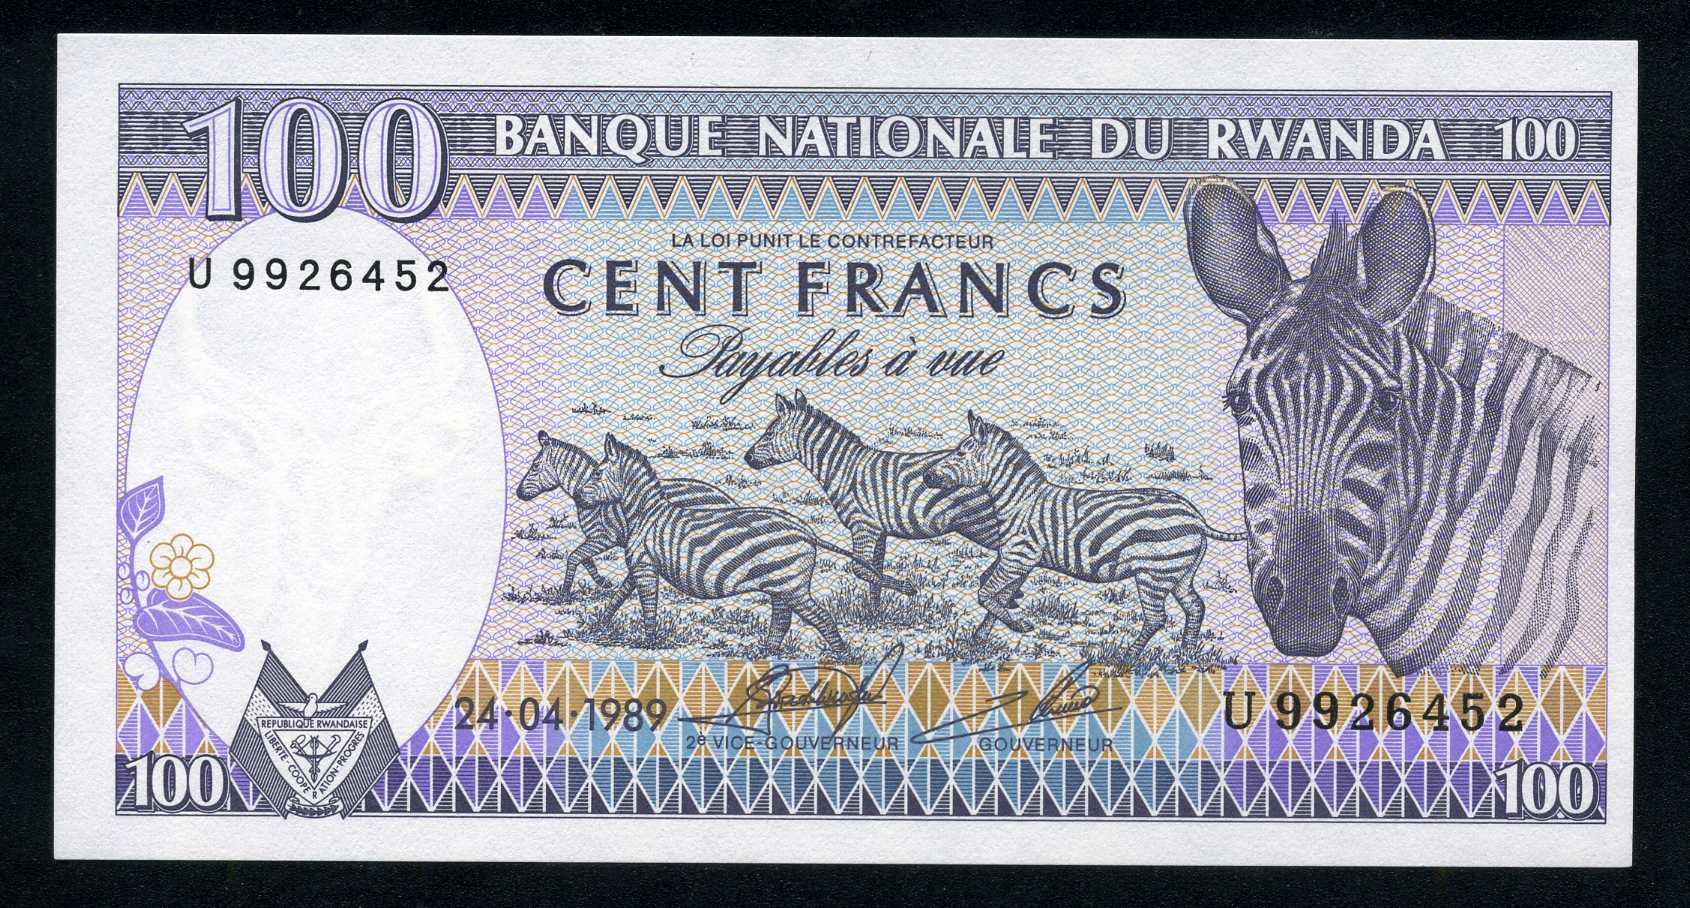 Foto BILLETES - Billetes mundiales - RUA000019 - Ruanda 100 Francos 1989 Sin circular Foto estandar